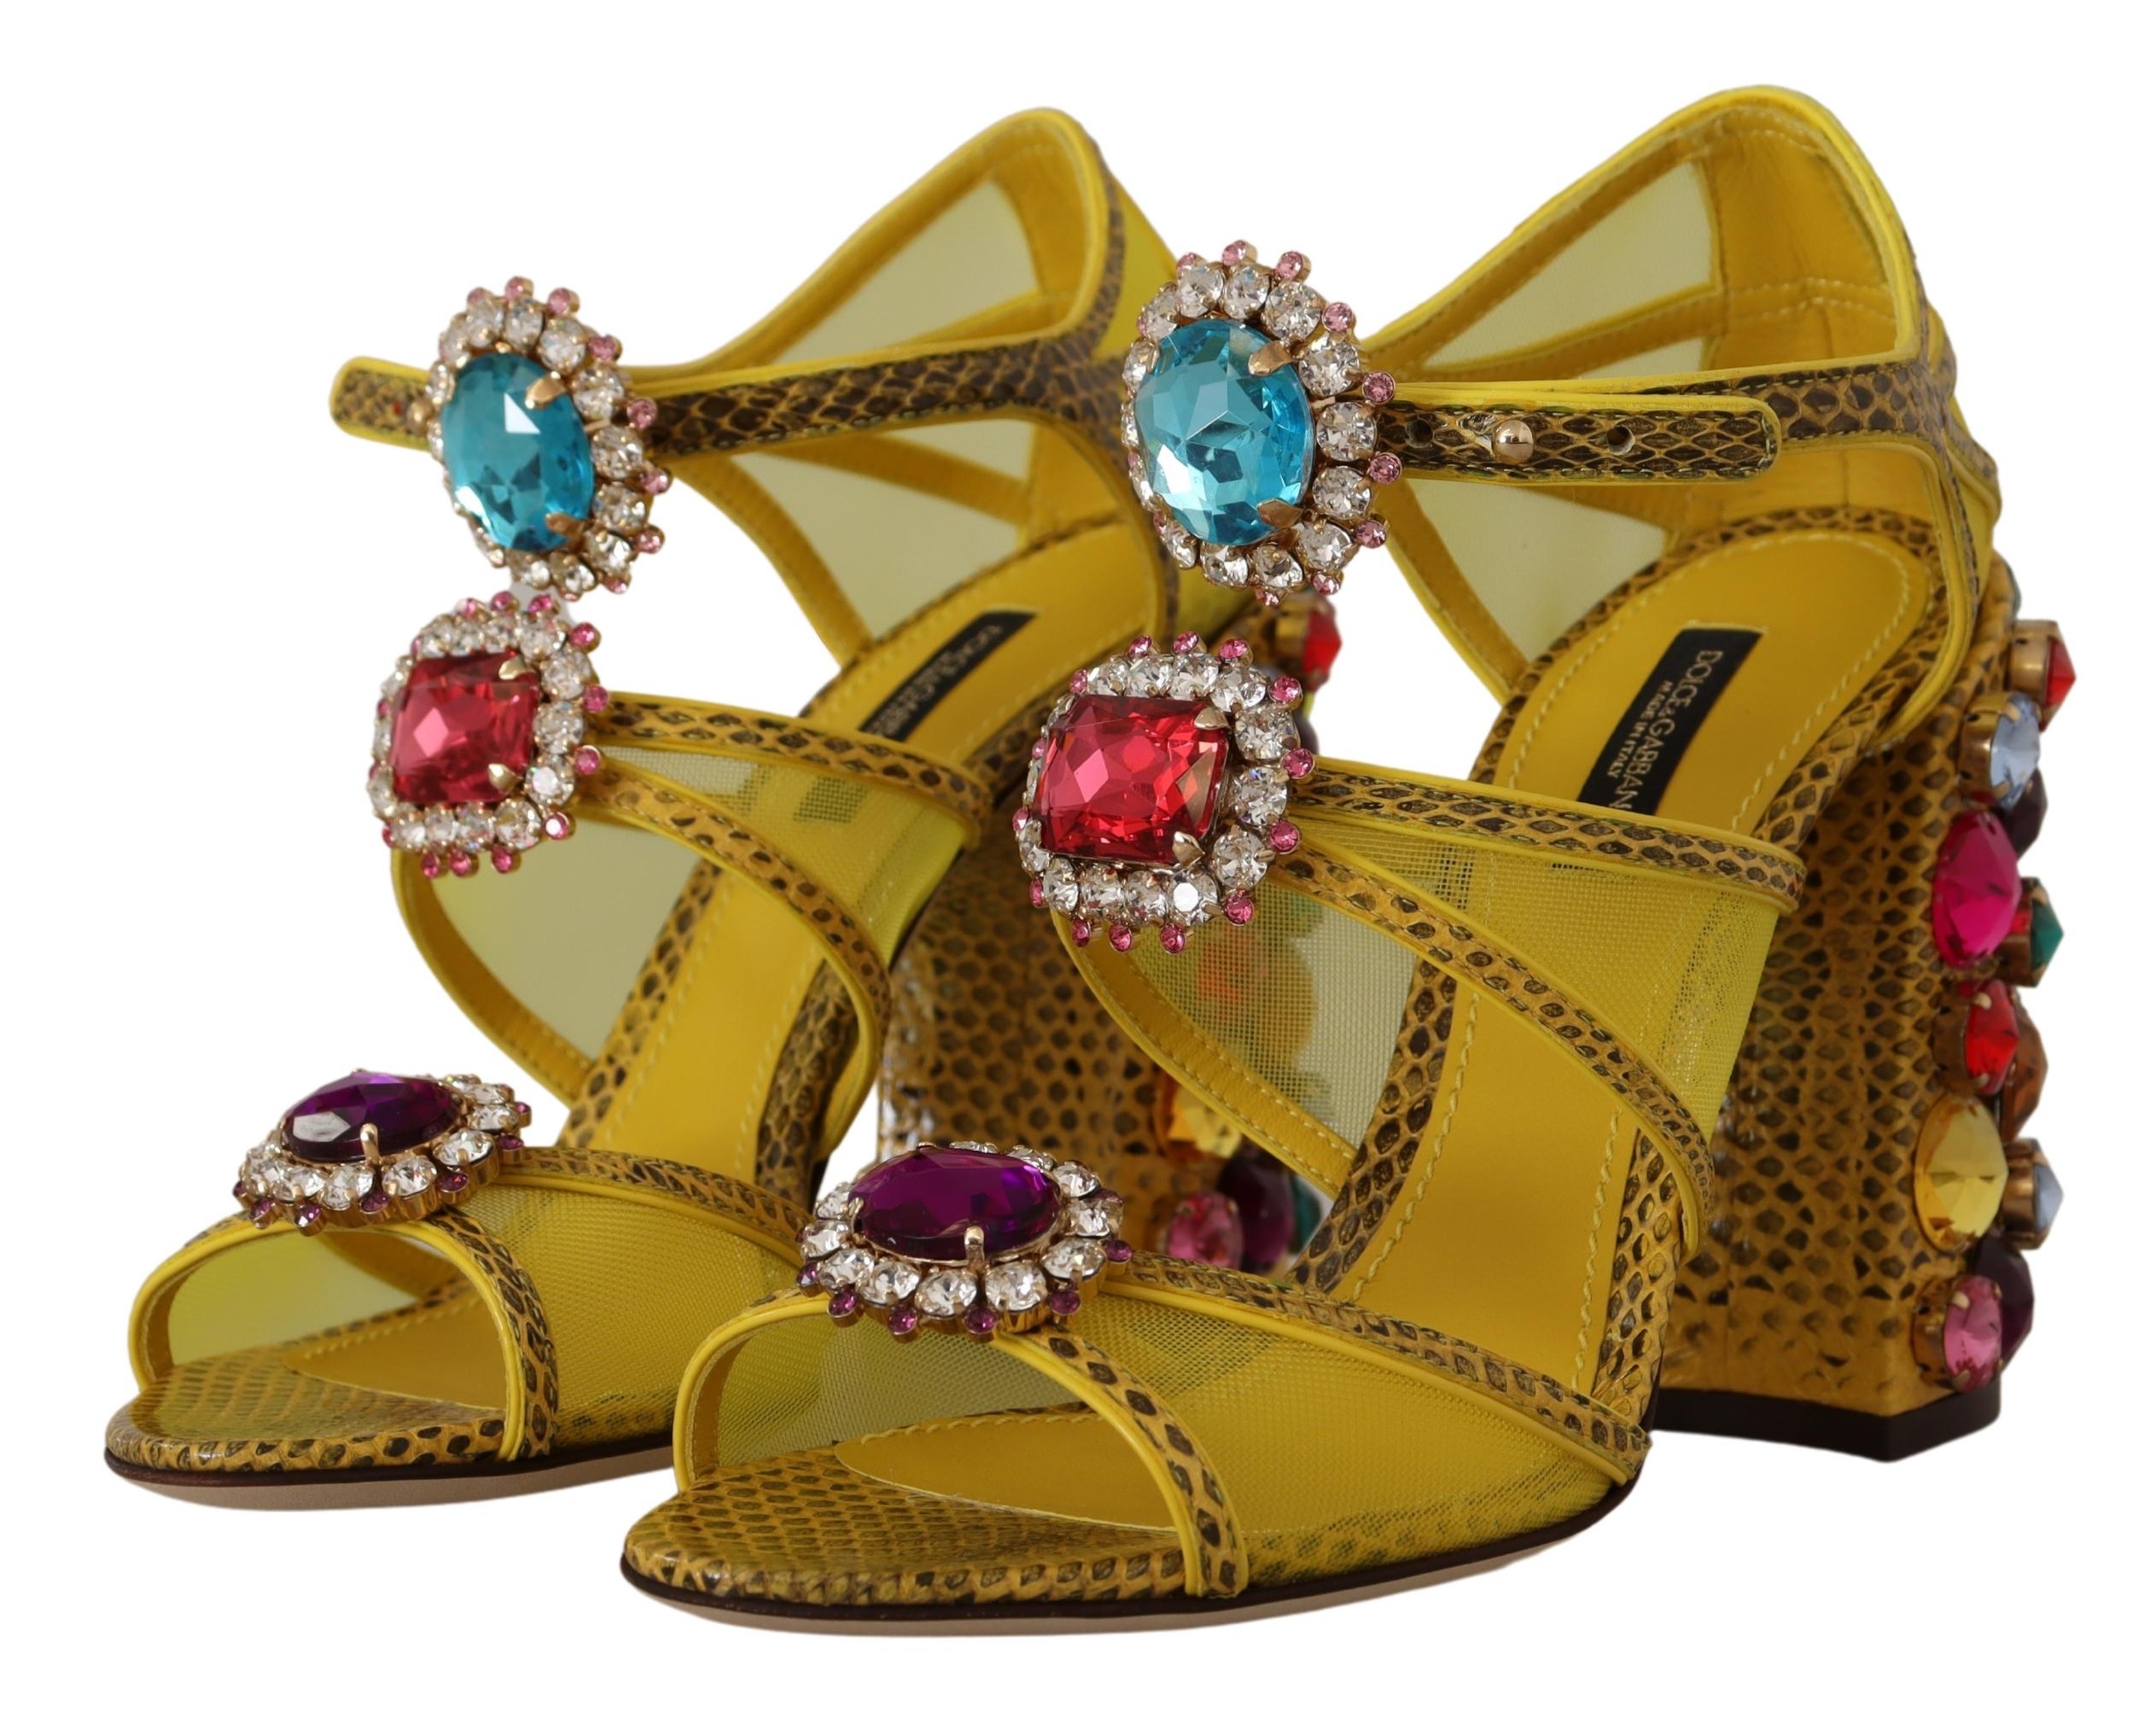 Dolce & Gabbana Shoes Raffia & Fruit Snakeskin Slingback Sandals Heels 38 |  eBay